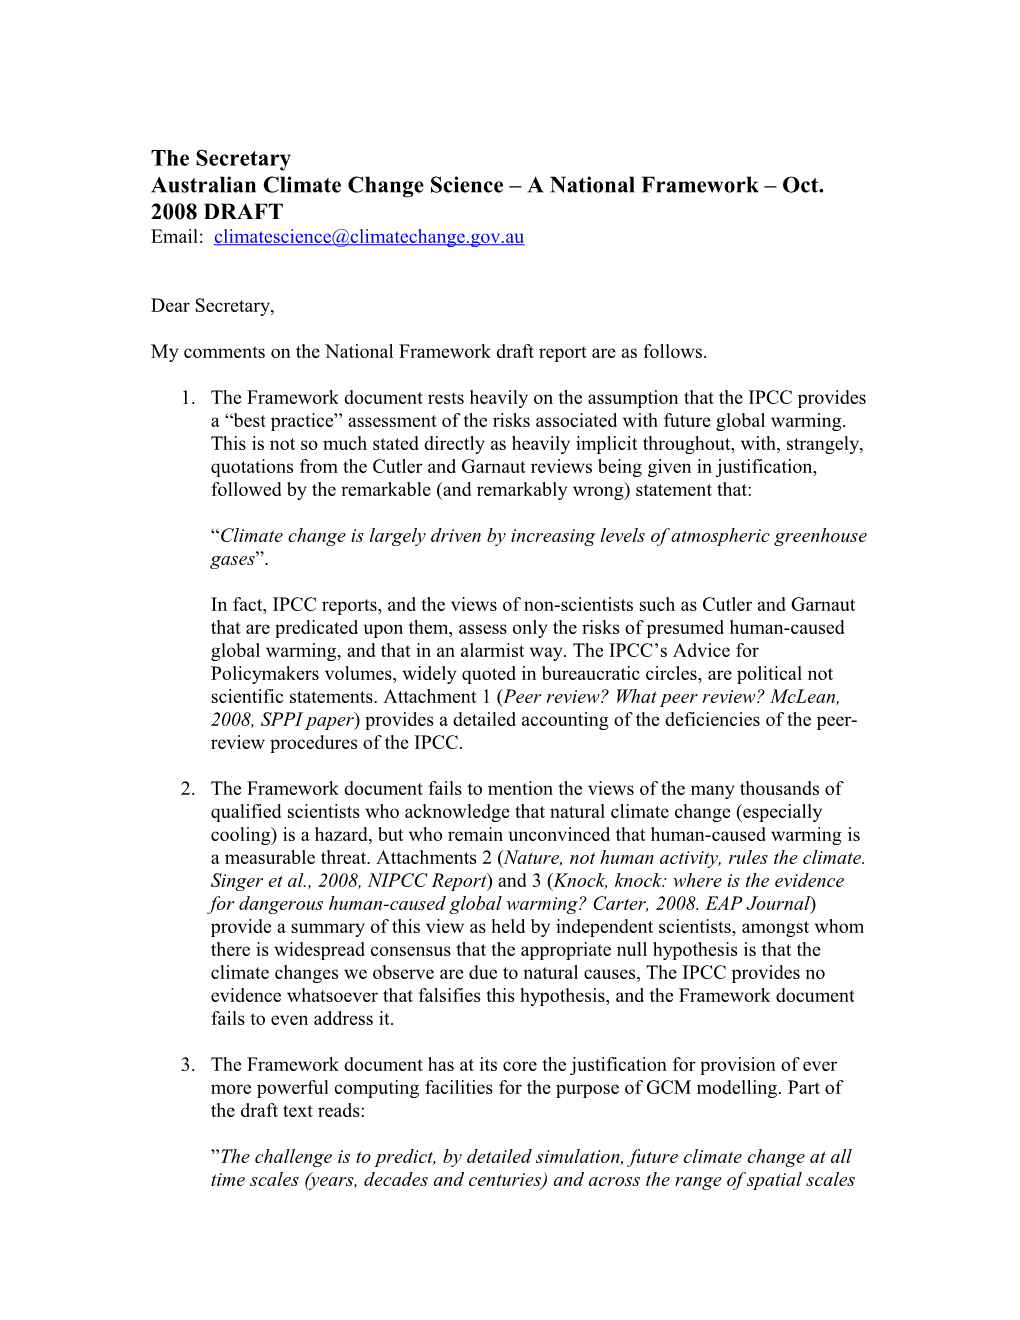 Email: Climatescience Climatechange